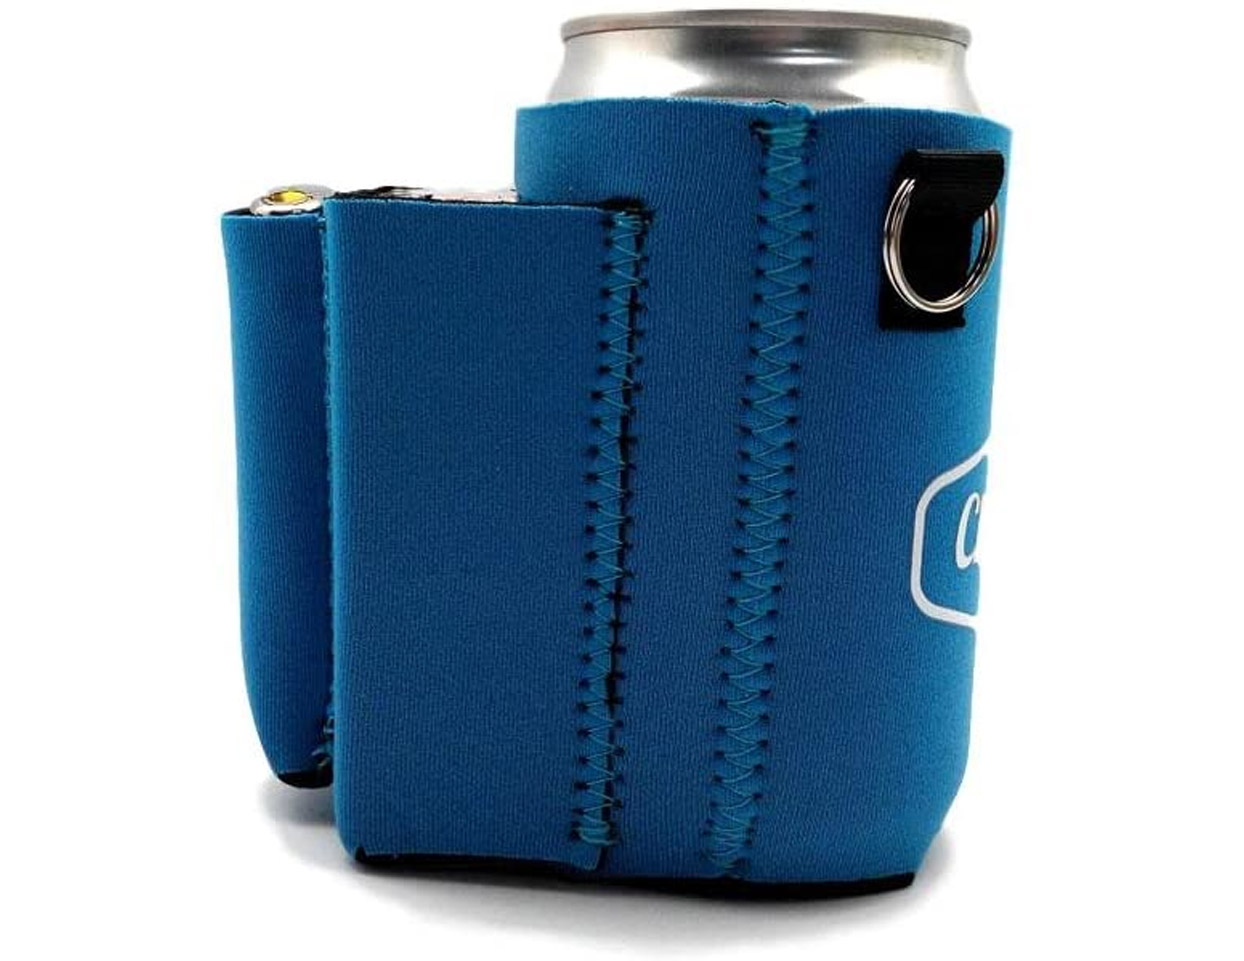 Triple Pocket Beer Koozie Holds pack of cigarettes and lighter (or snack, phone, lipstick)